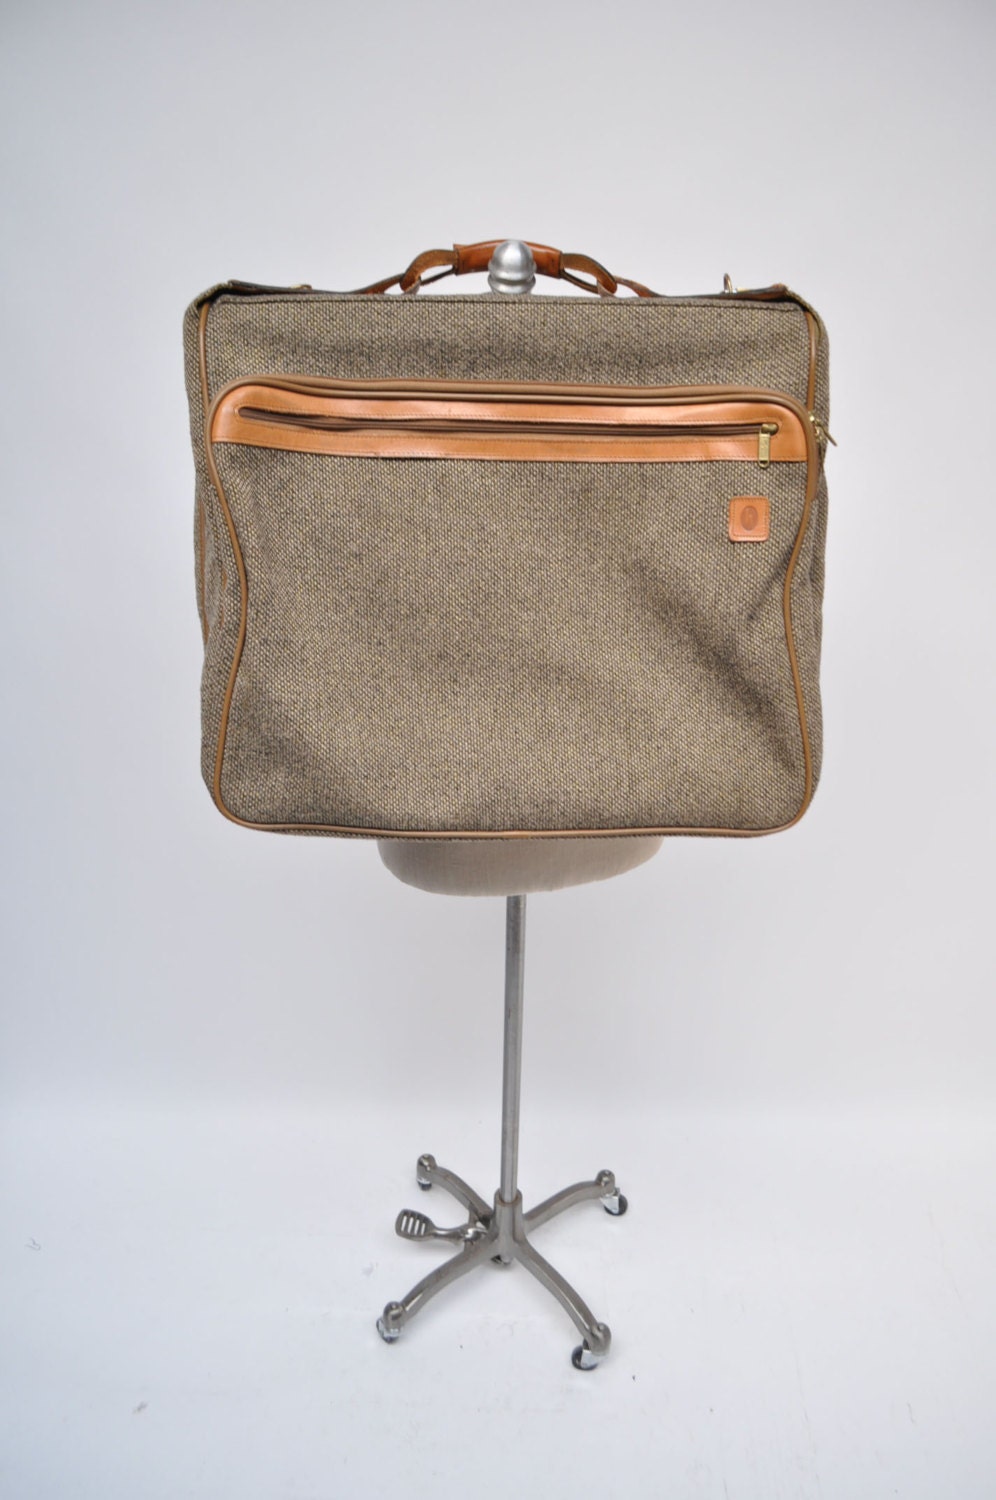 HARTMANN vintage leather bag canvas GARMENT BAG travel luggage